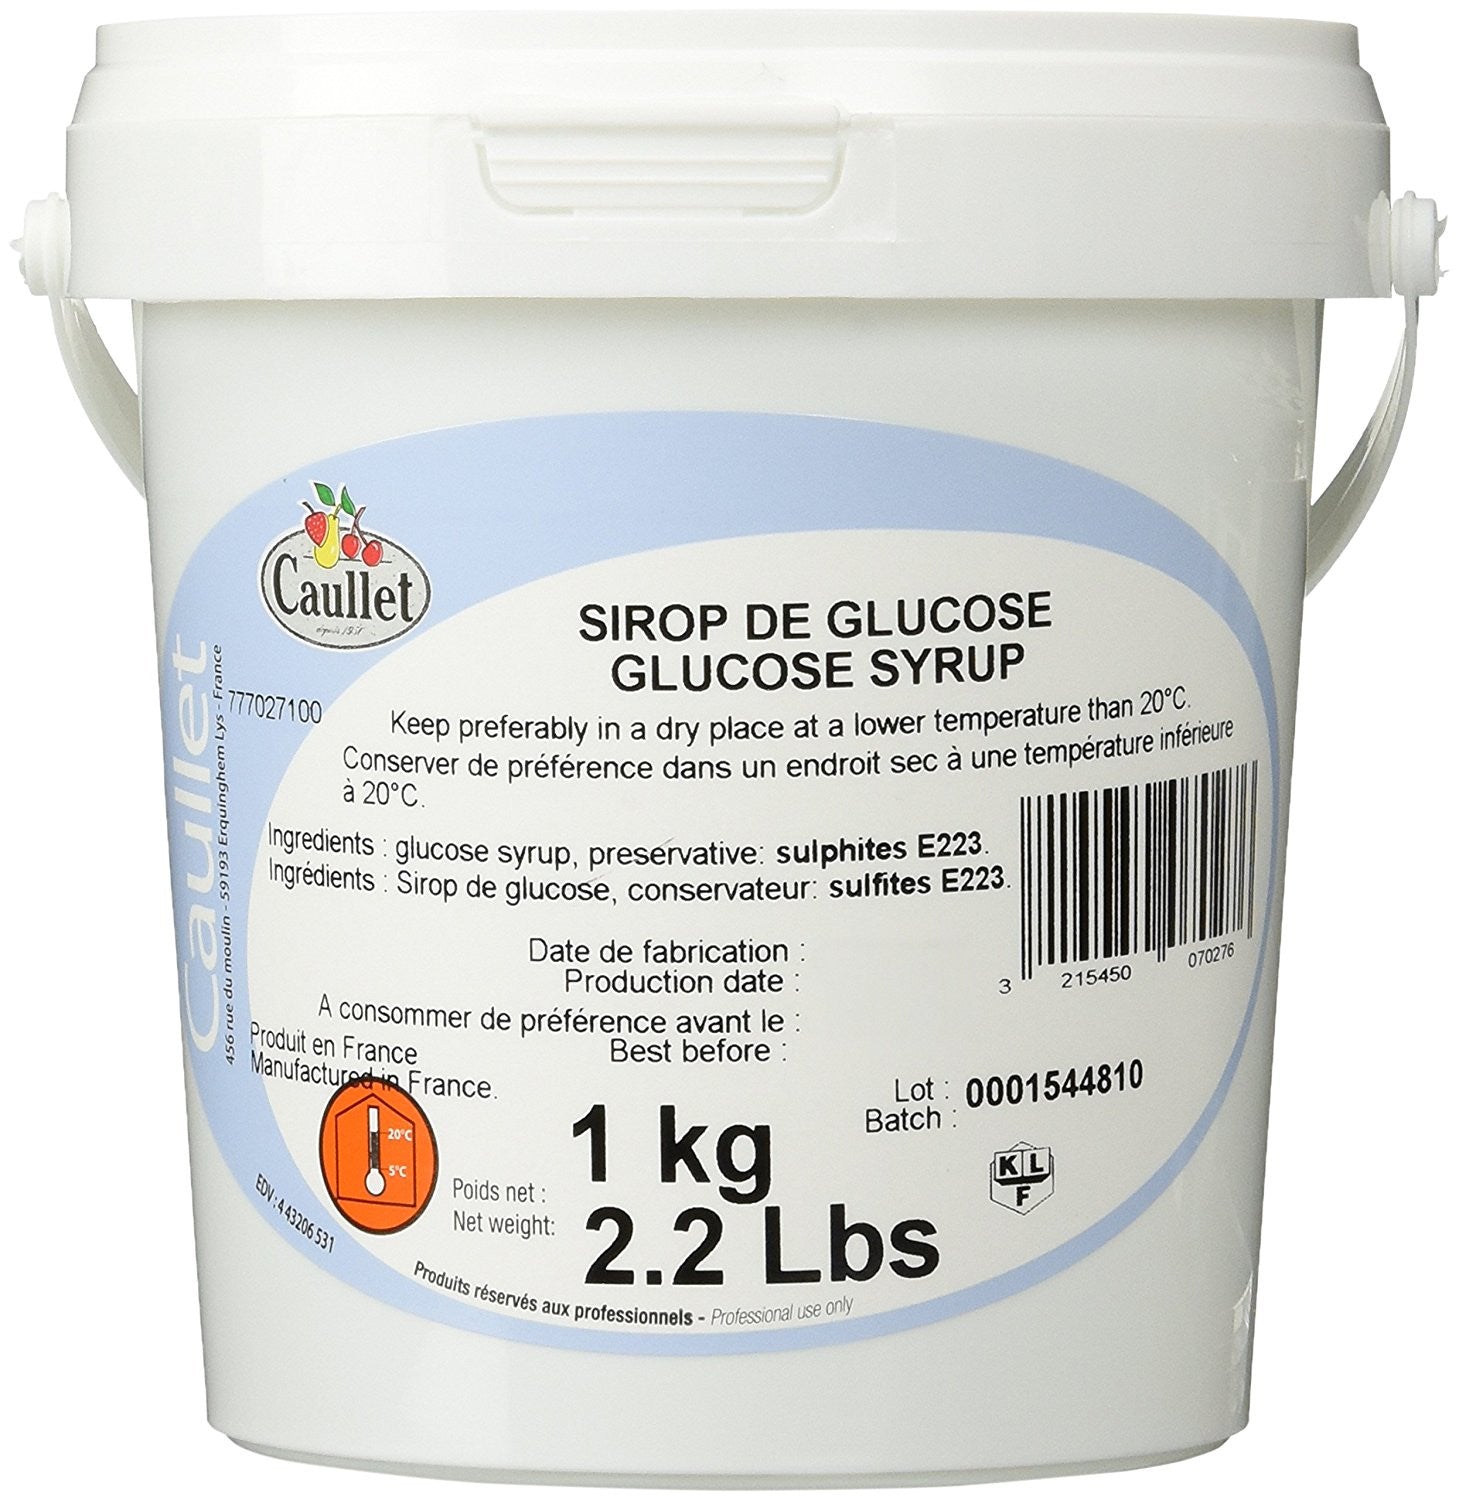 Sirop de glucose